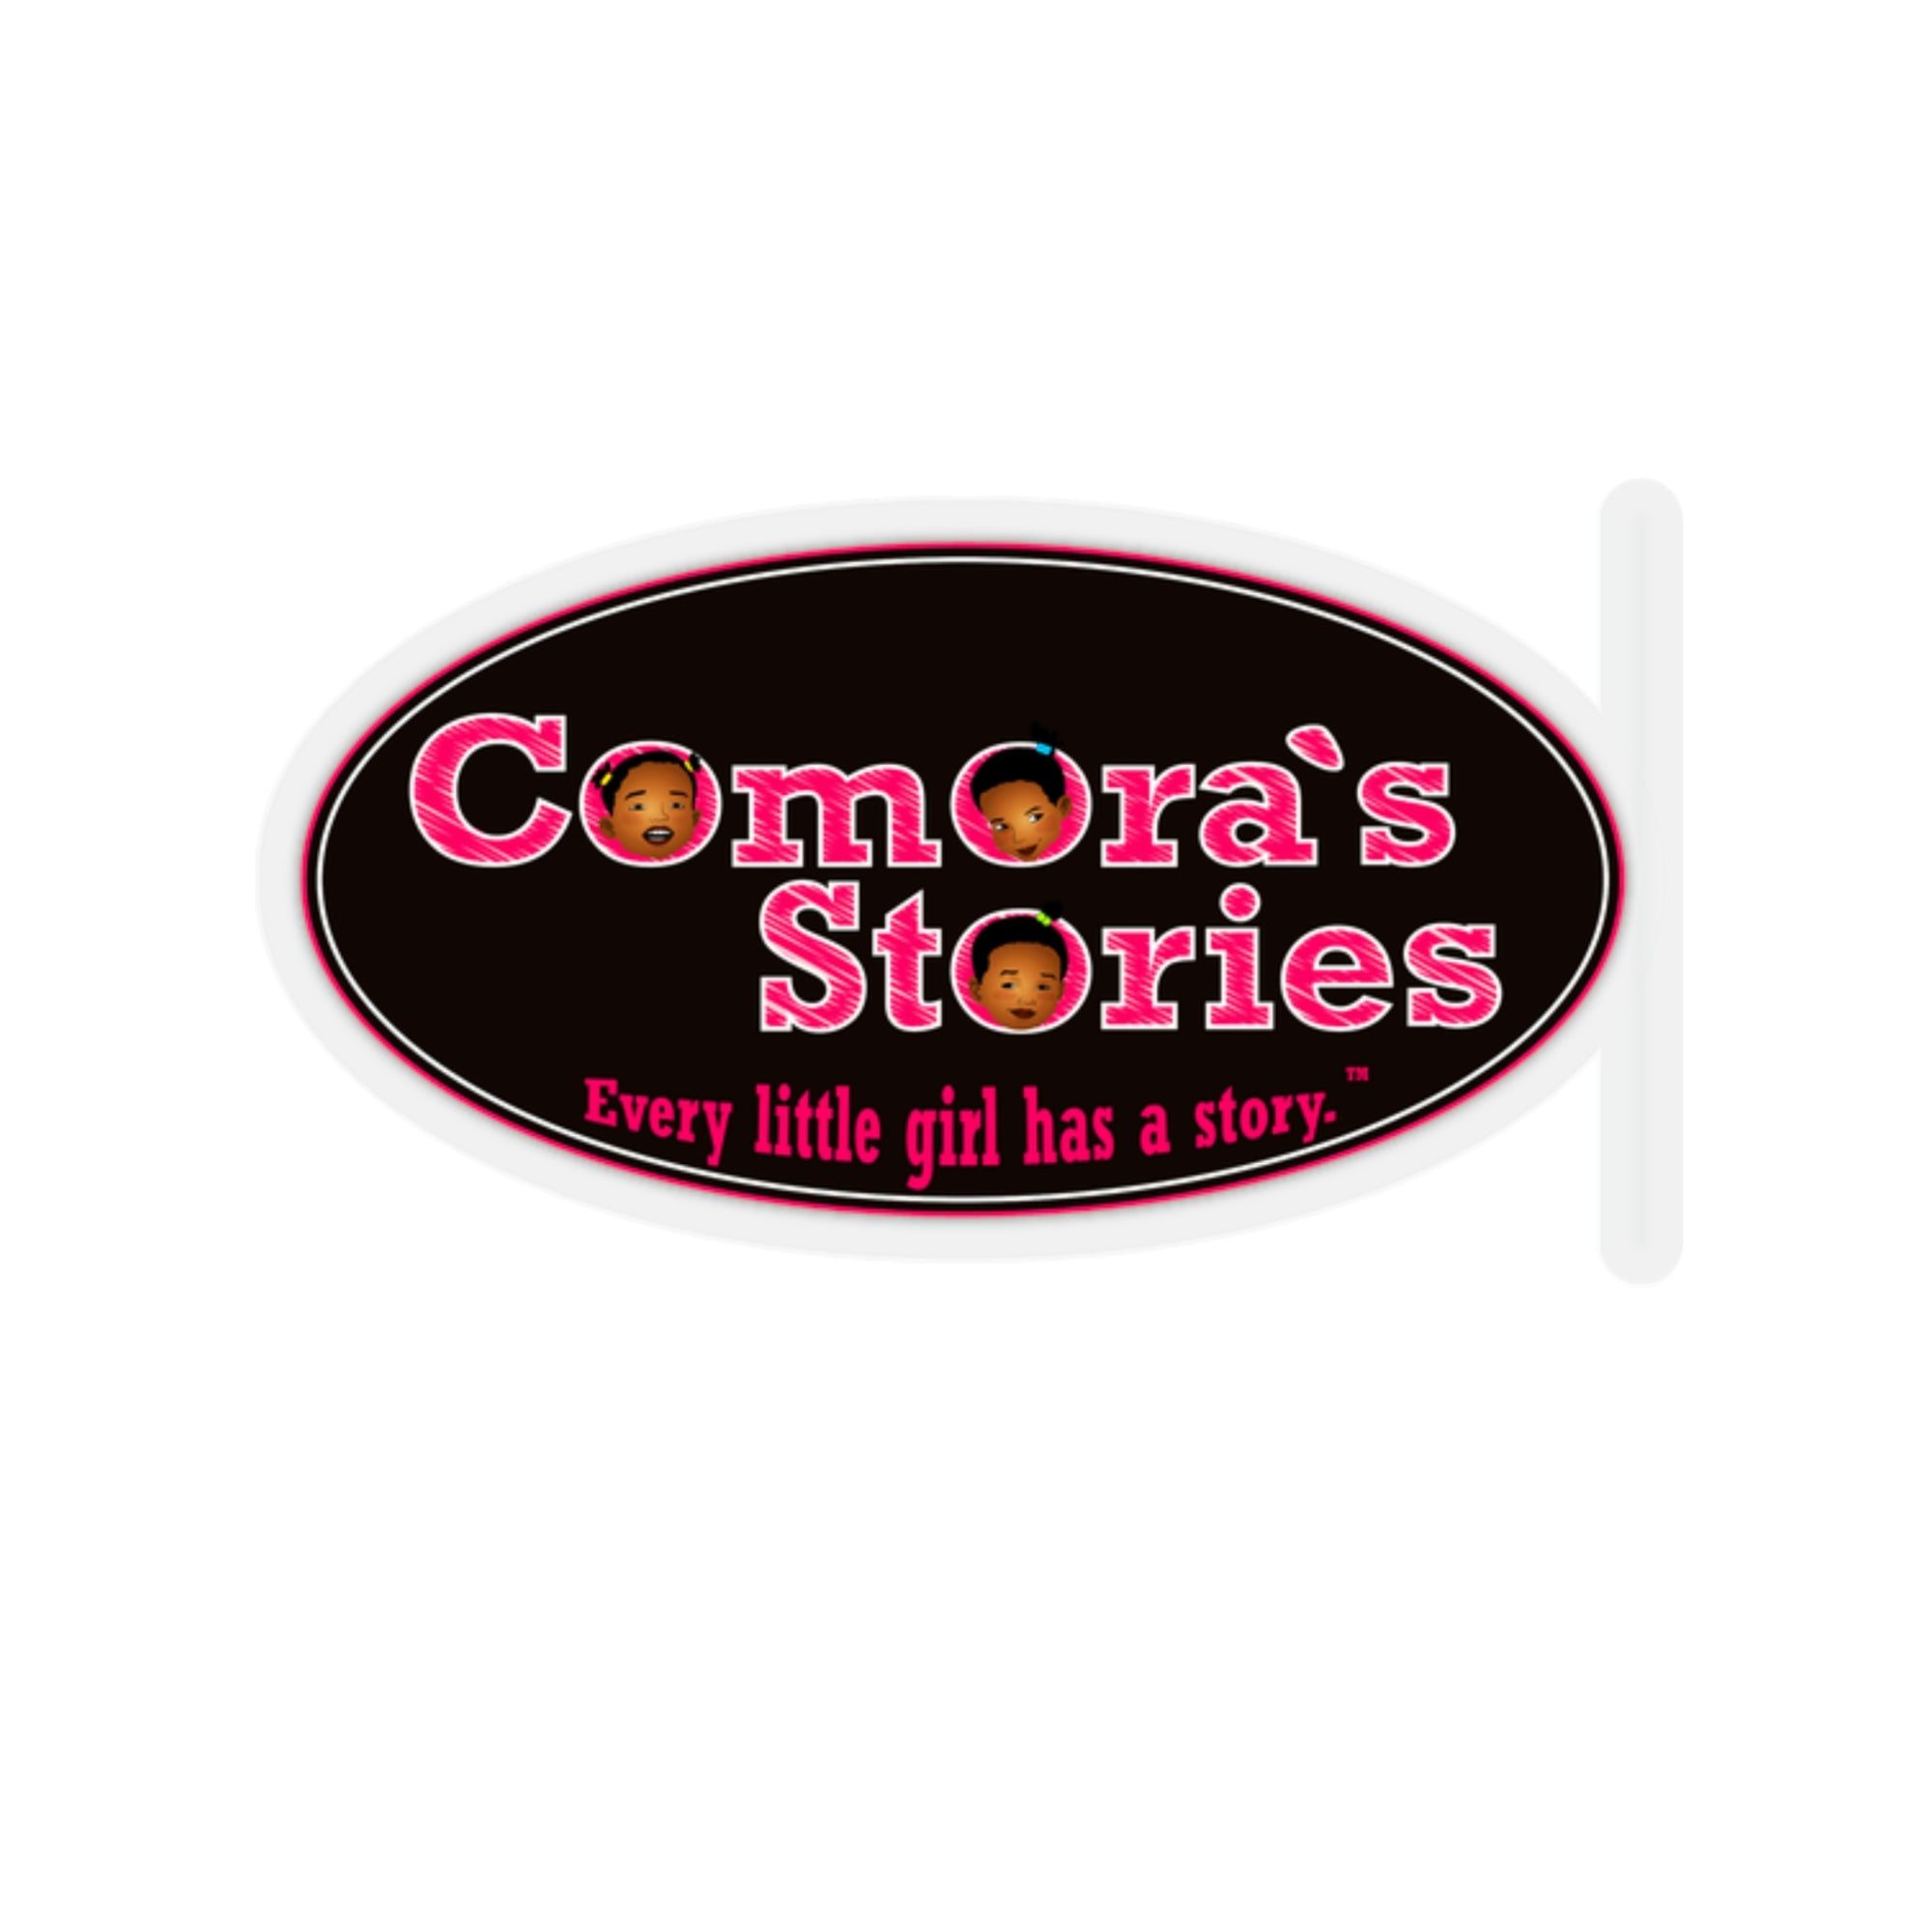 Comora's Stories LOGO stickers